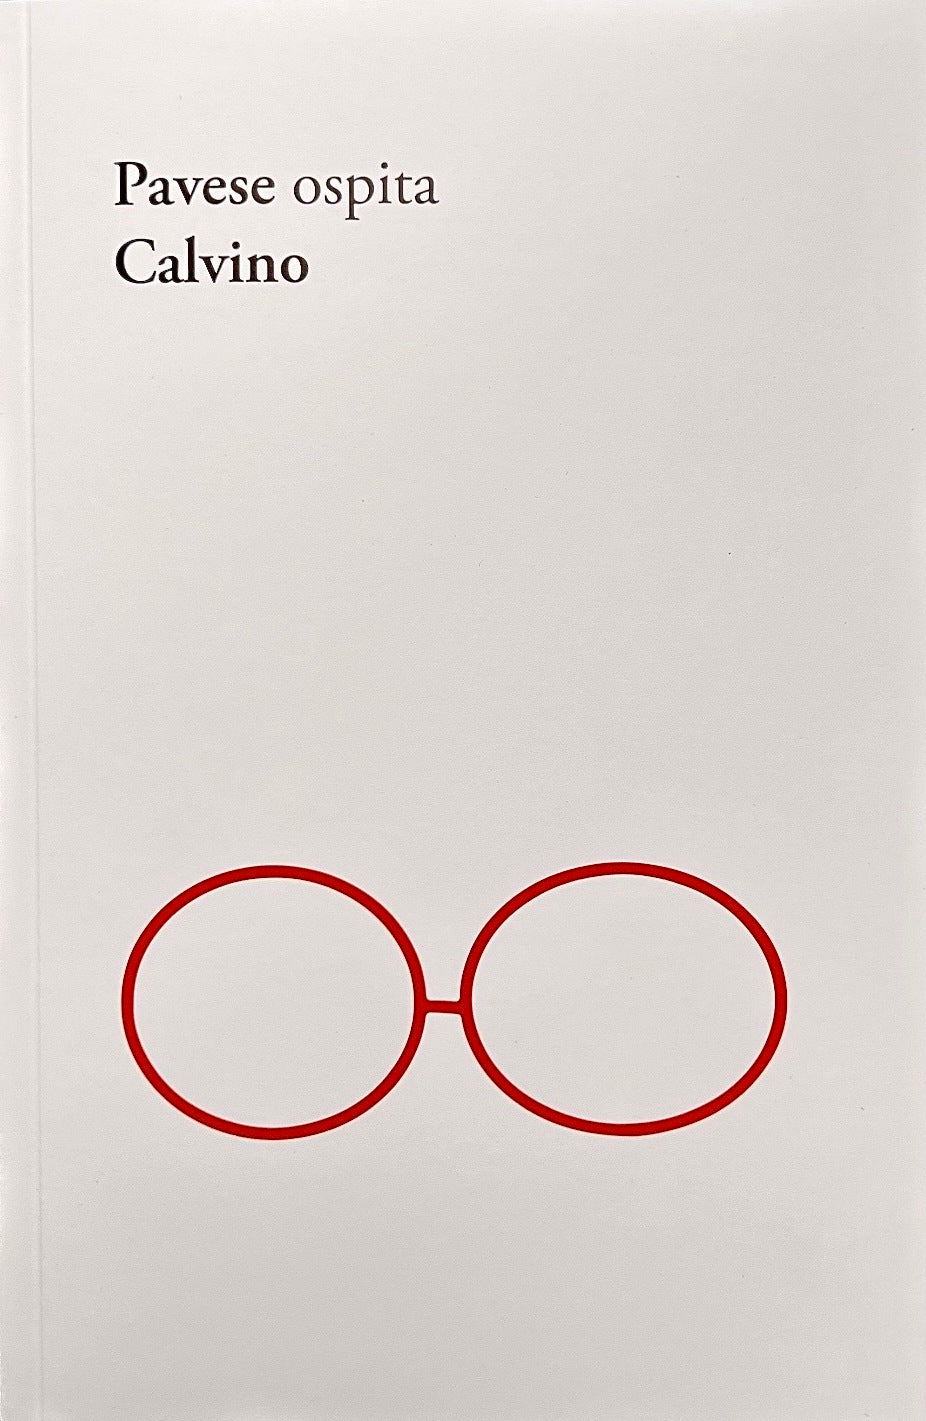 Catalogo mostra "Pavese ospita Calvino"